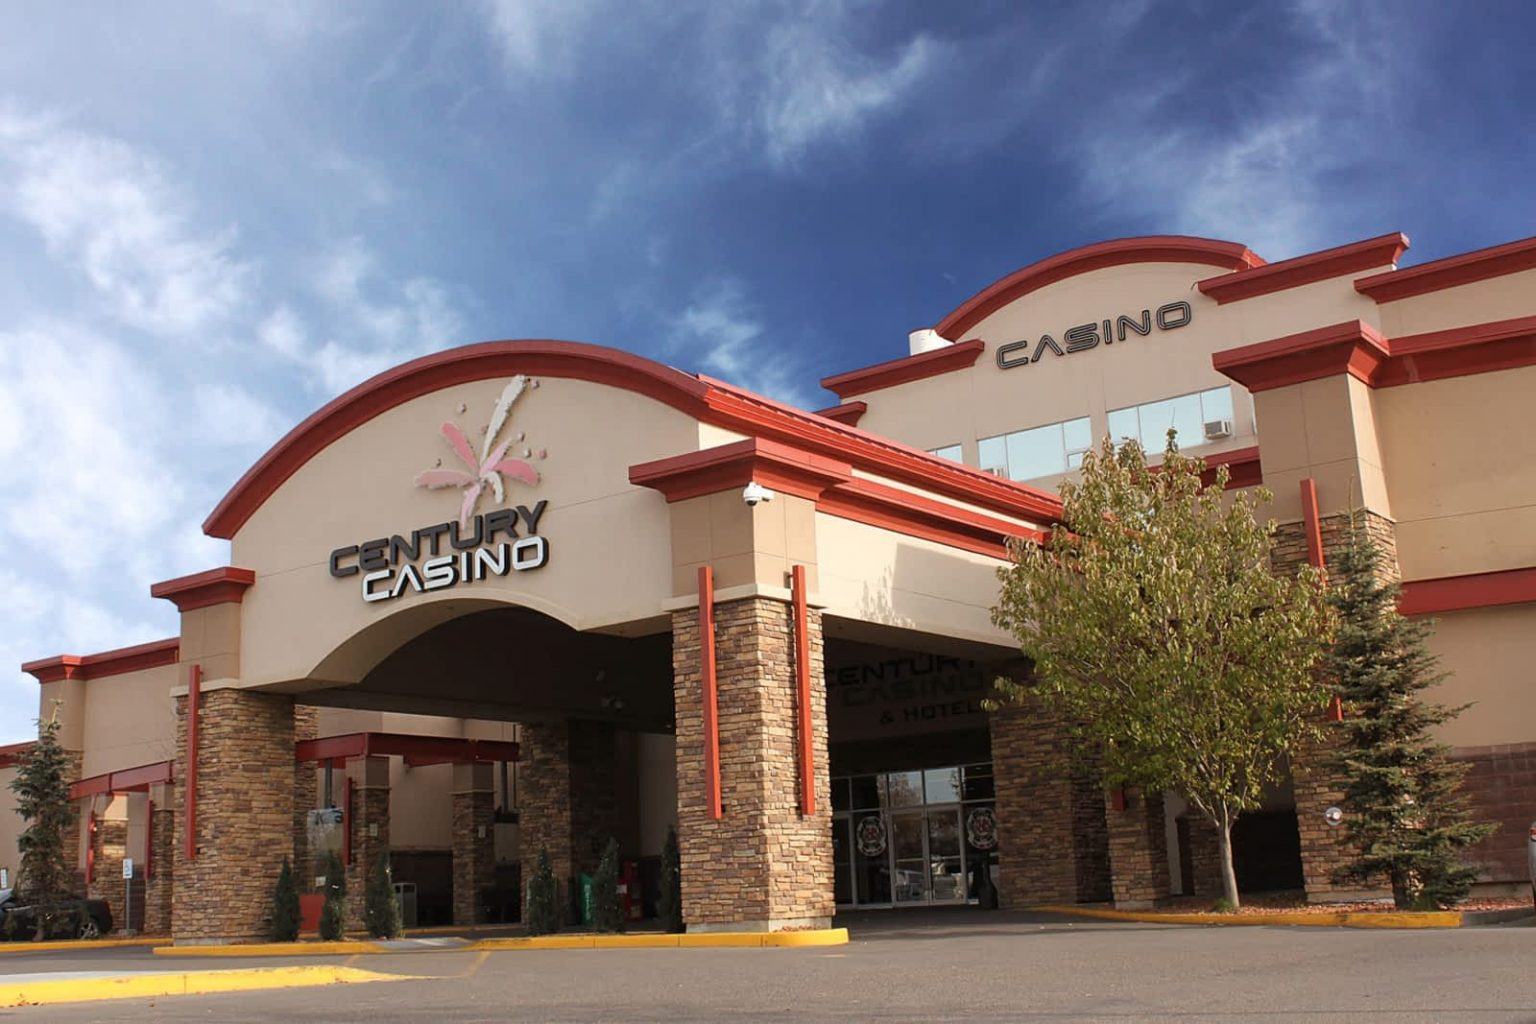 station casinos stock